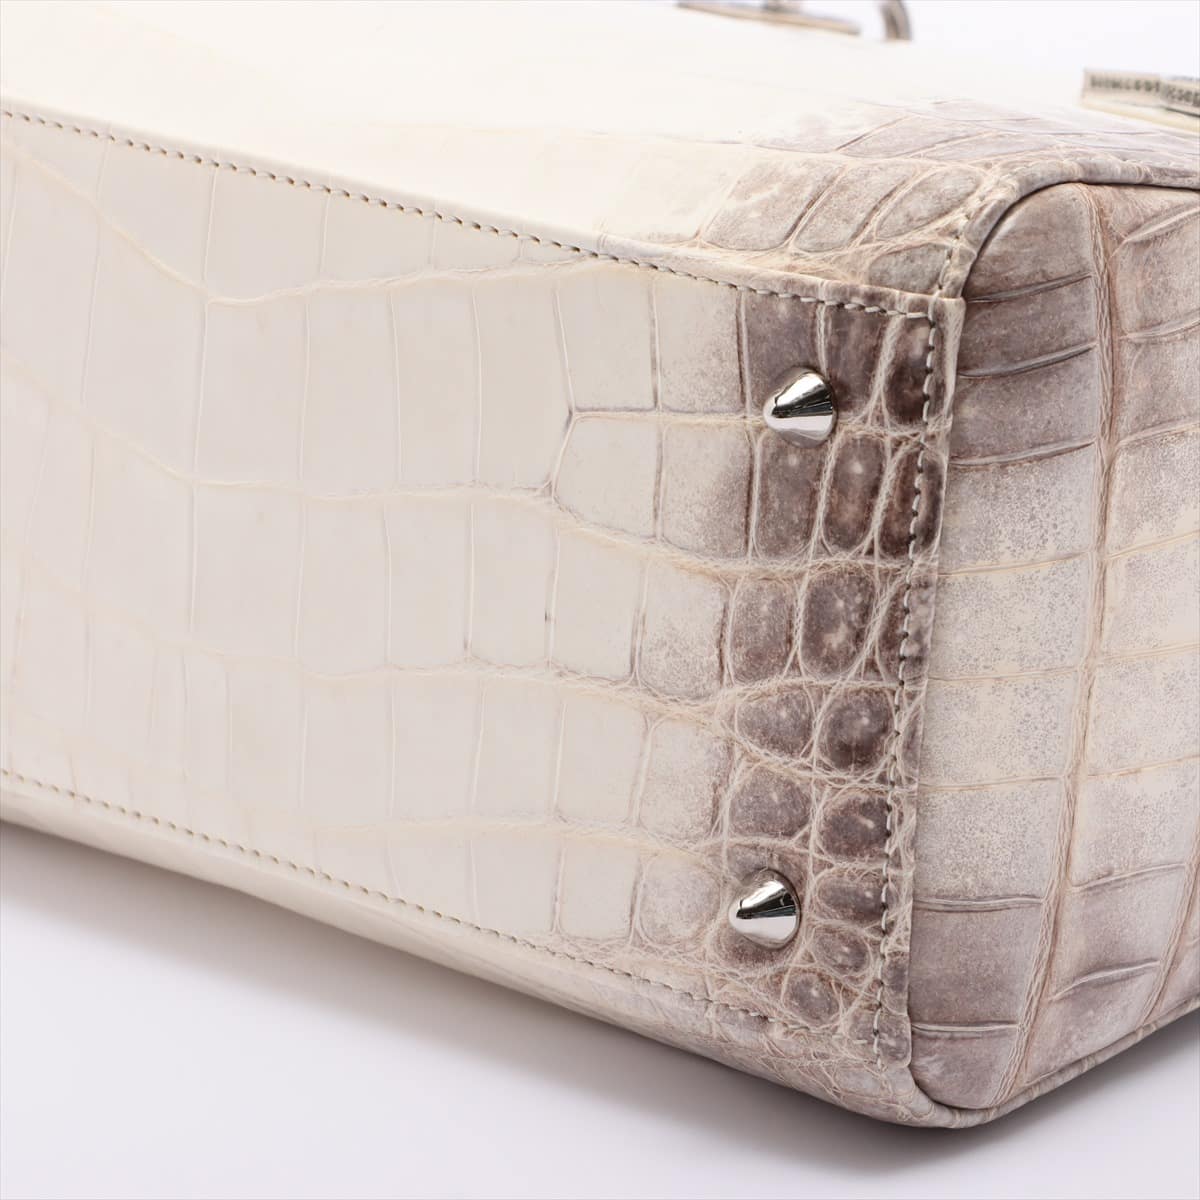 Christian Dior Lady Dior Crocodile 2way handbag White Himalaya